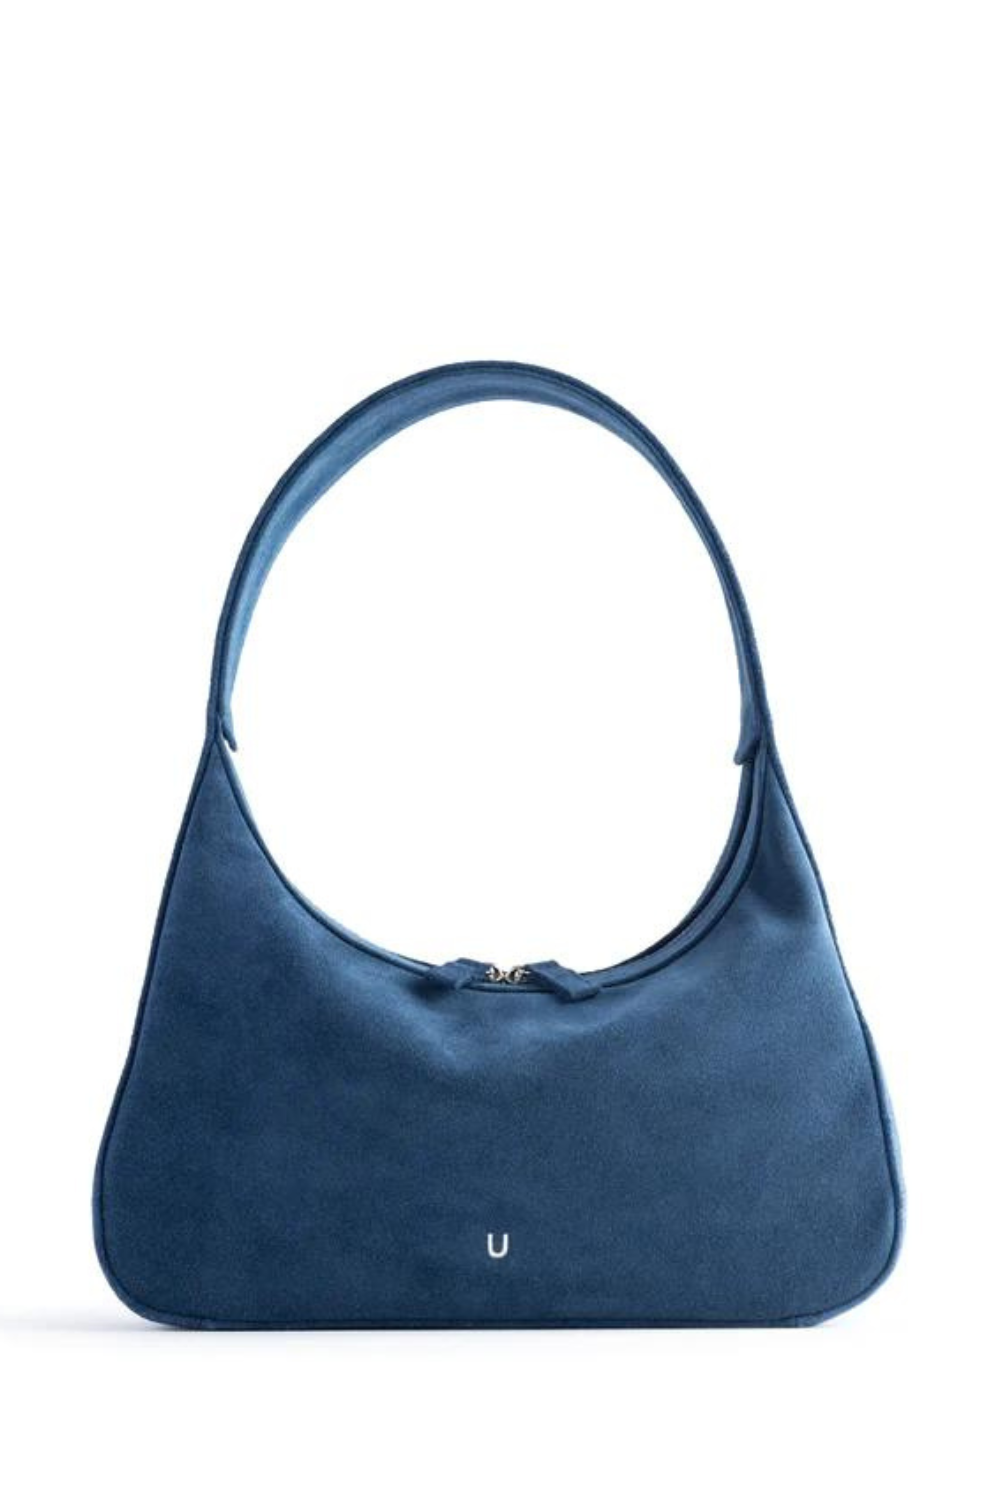 Dámská kabelka SHOULDER, barva džínsová (Uyava) SUEDE00000003